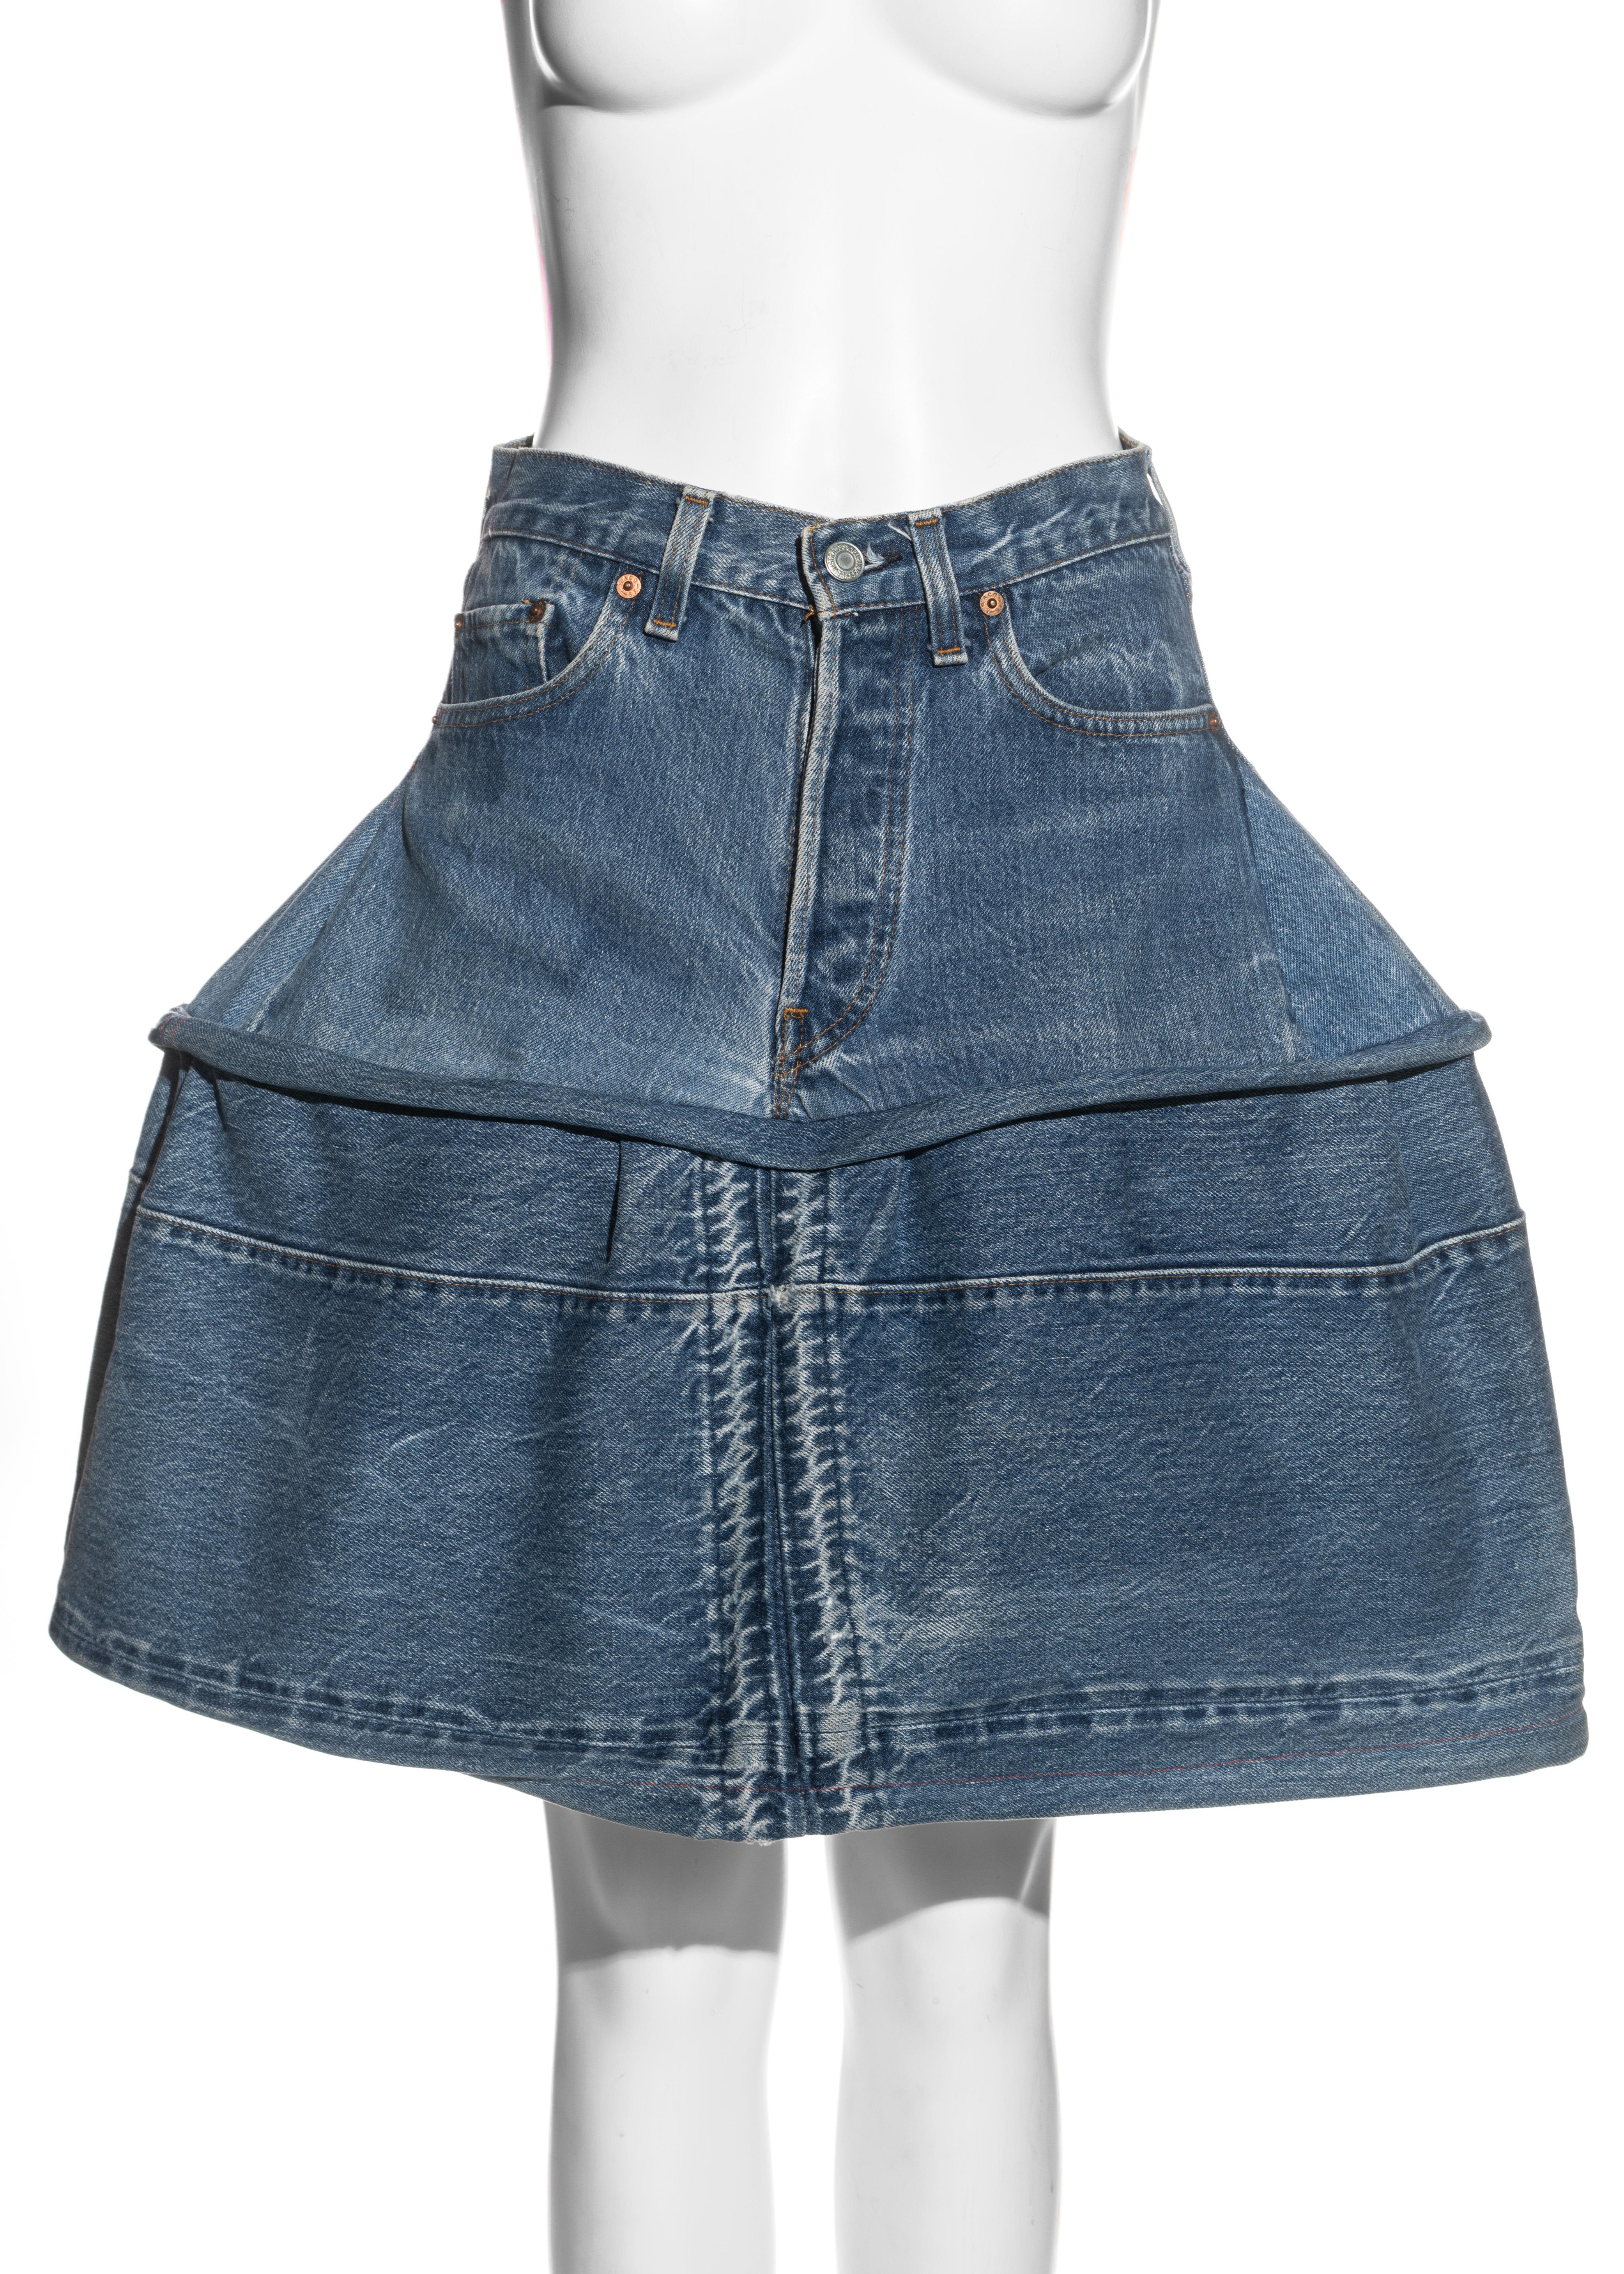 ▪ Vivienne Westwood denim 'Mini-Crini' skirt 
▪ Made with recycled Levi's denim jeans 
▪ Plastic boning 
▪ Waist 28 inch
▪ Spring-Summer 1985